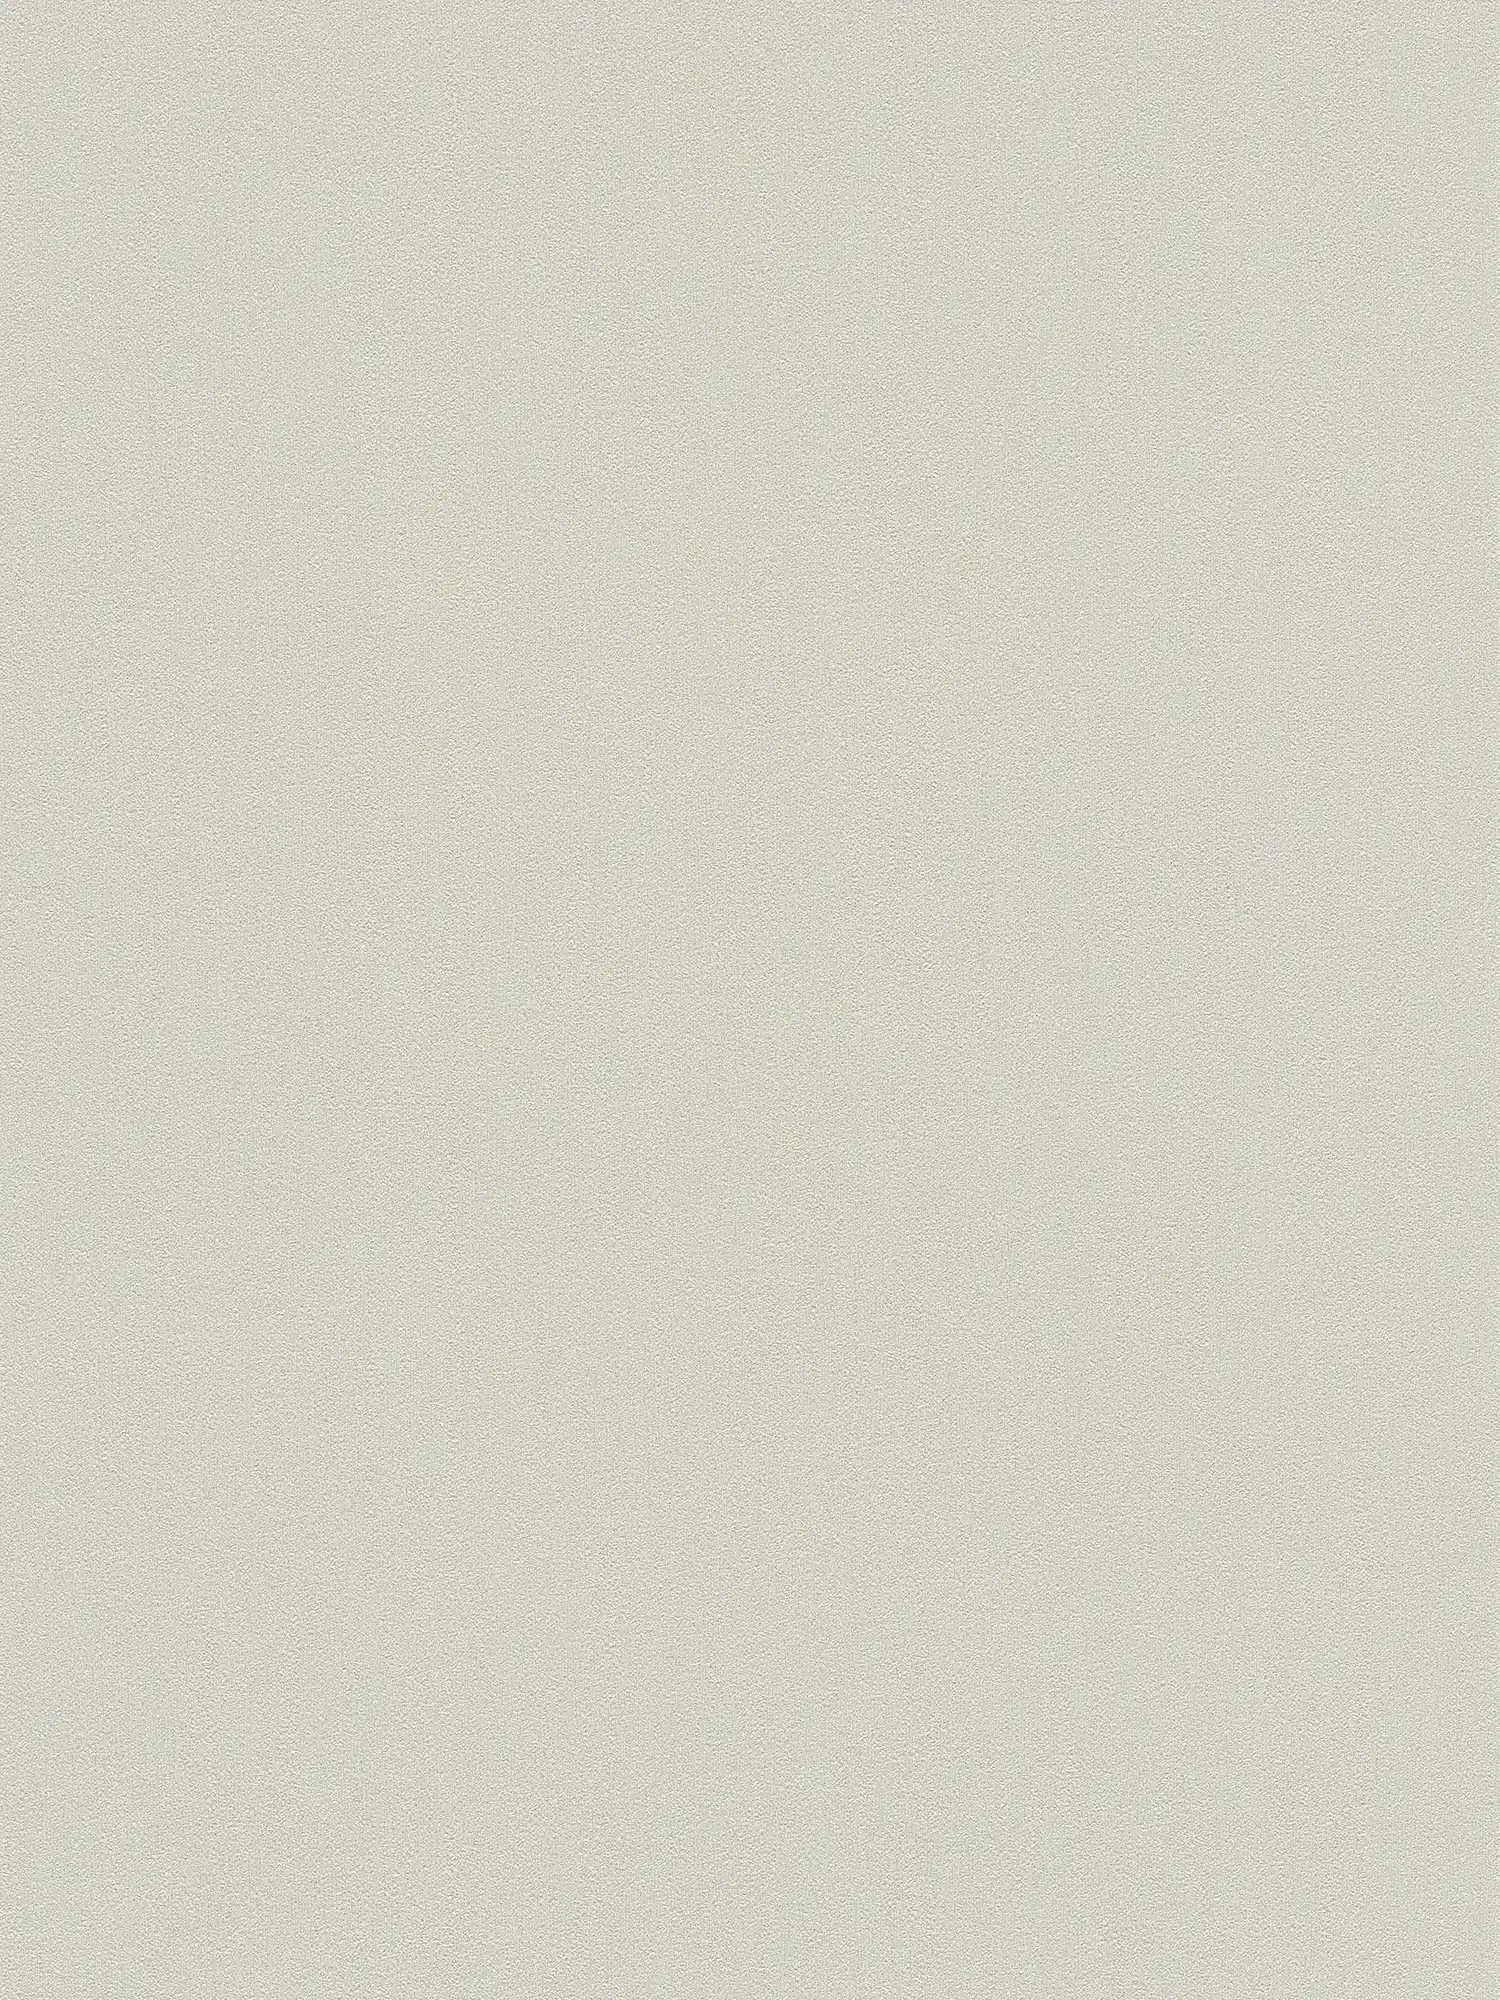 Karl LAGERFELD Carta da parati in tessuto non tessuto tinta unita e texture - grigio
